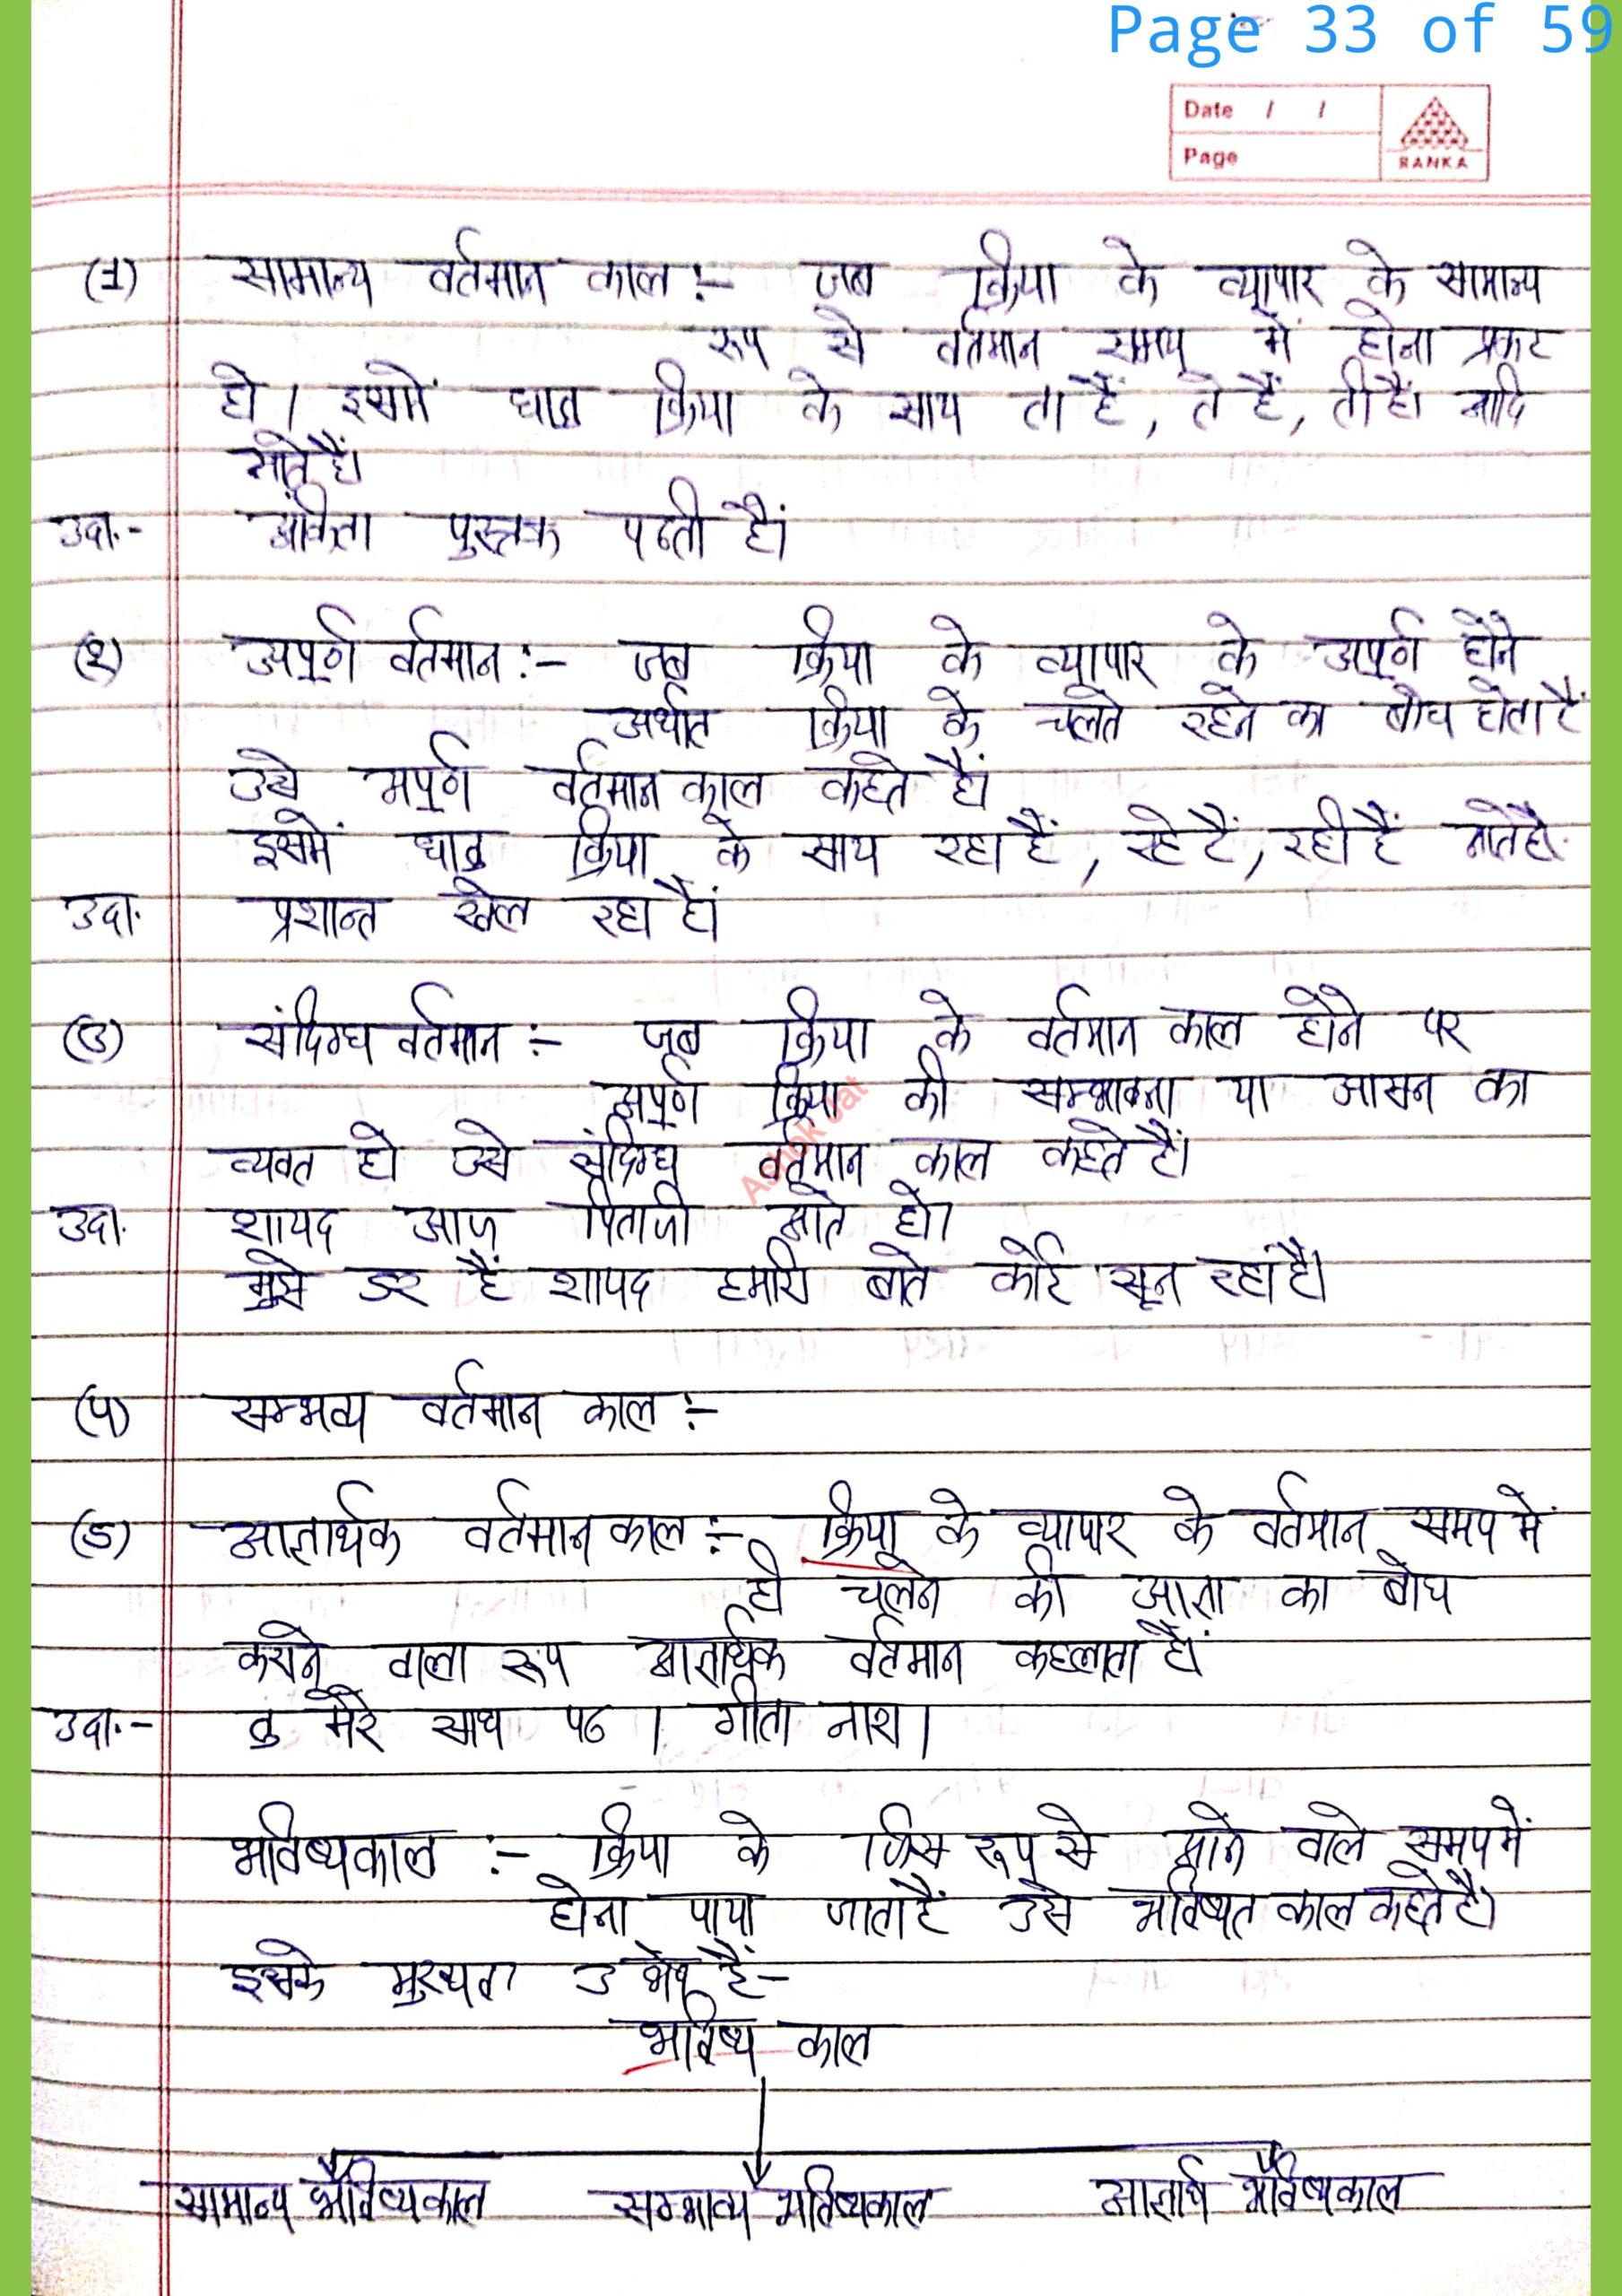 computer computer divice theory notes in hindi